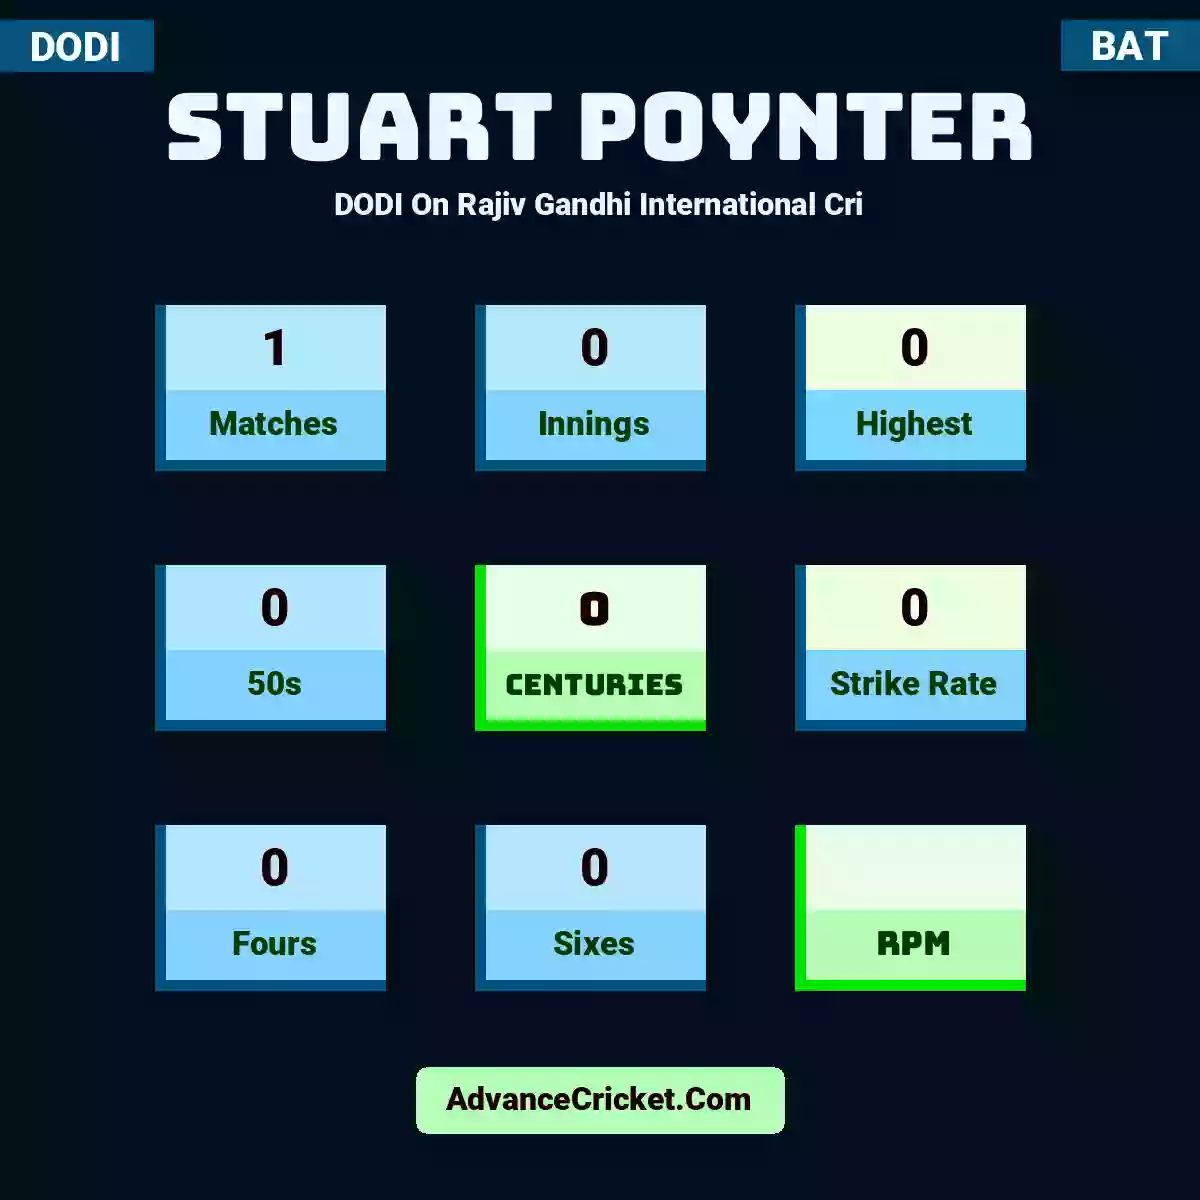 Stuart Poynter DODI  On Rajiv Gandhi International Cri, Stuart Poynter played 1 matches, scored 0 runs as highest, 0 half-centuries, and 0 centuries, with a strike rate of 0. S.Poynter hit 0 fours and 0 sixes.